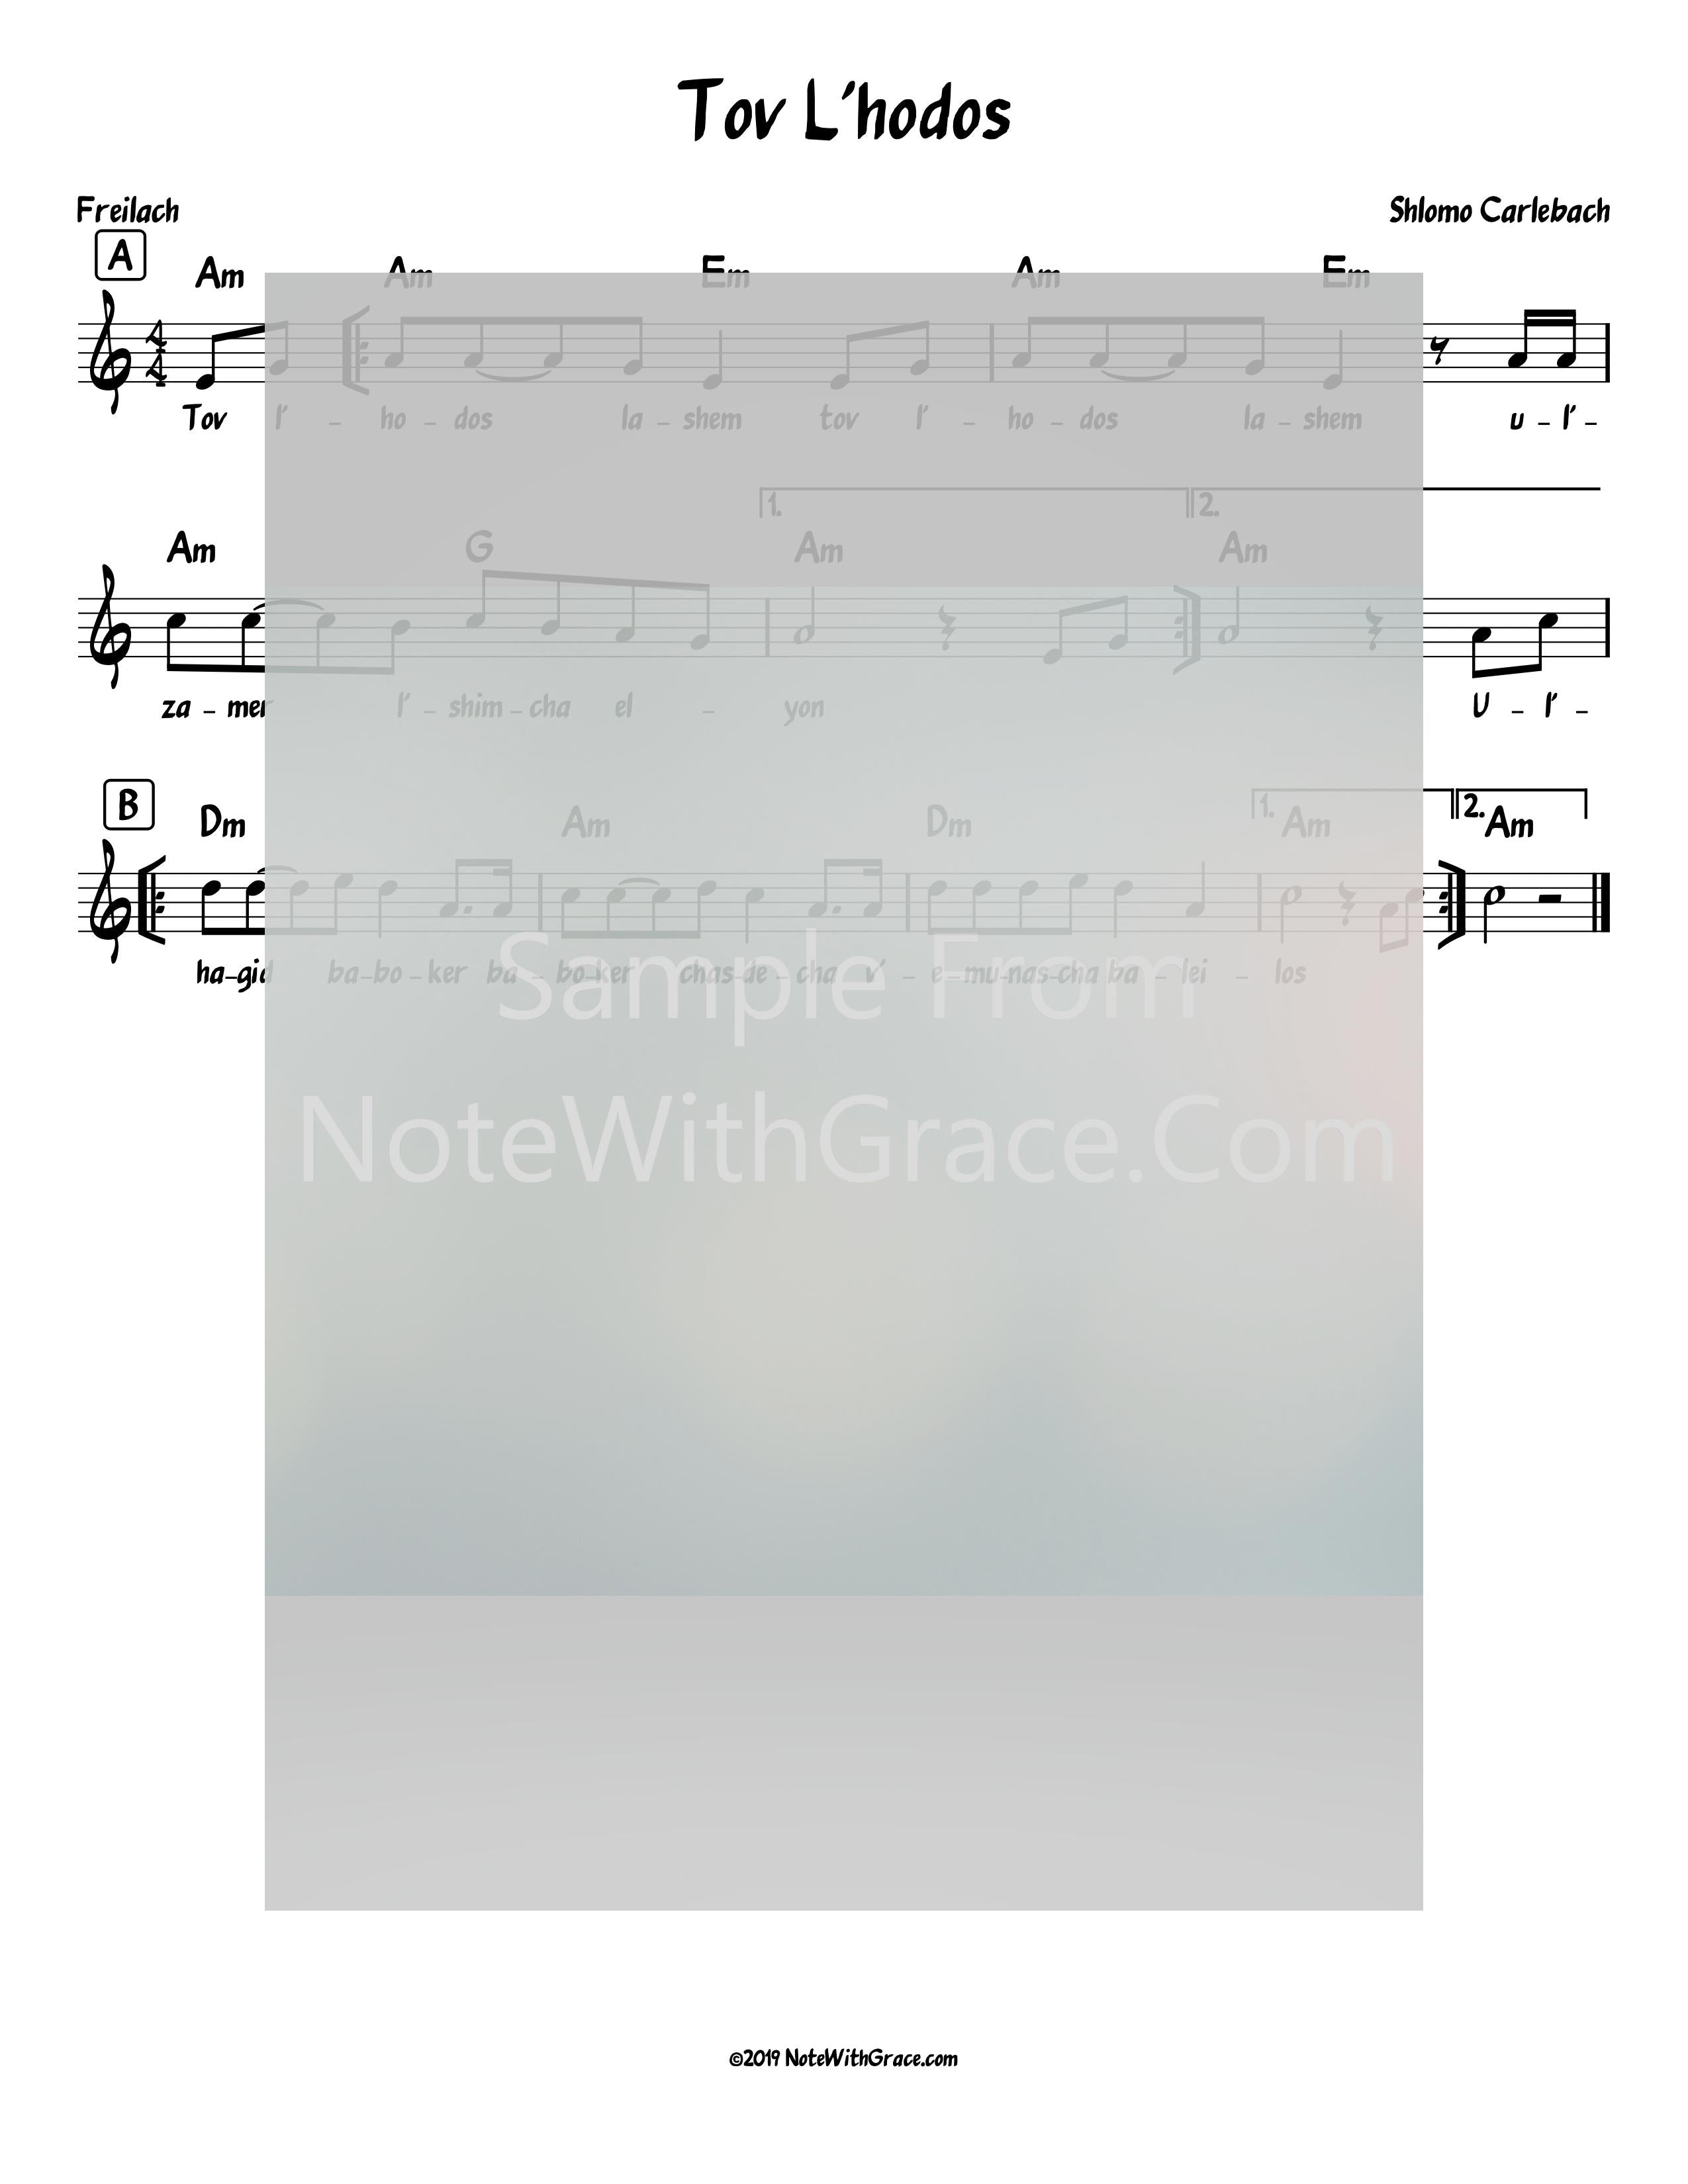 Tov Lehodos Lead Sheet (Shlomo Carlebach)-Sheet music-NoteWithGrace.com